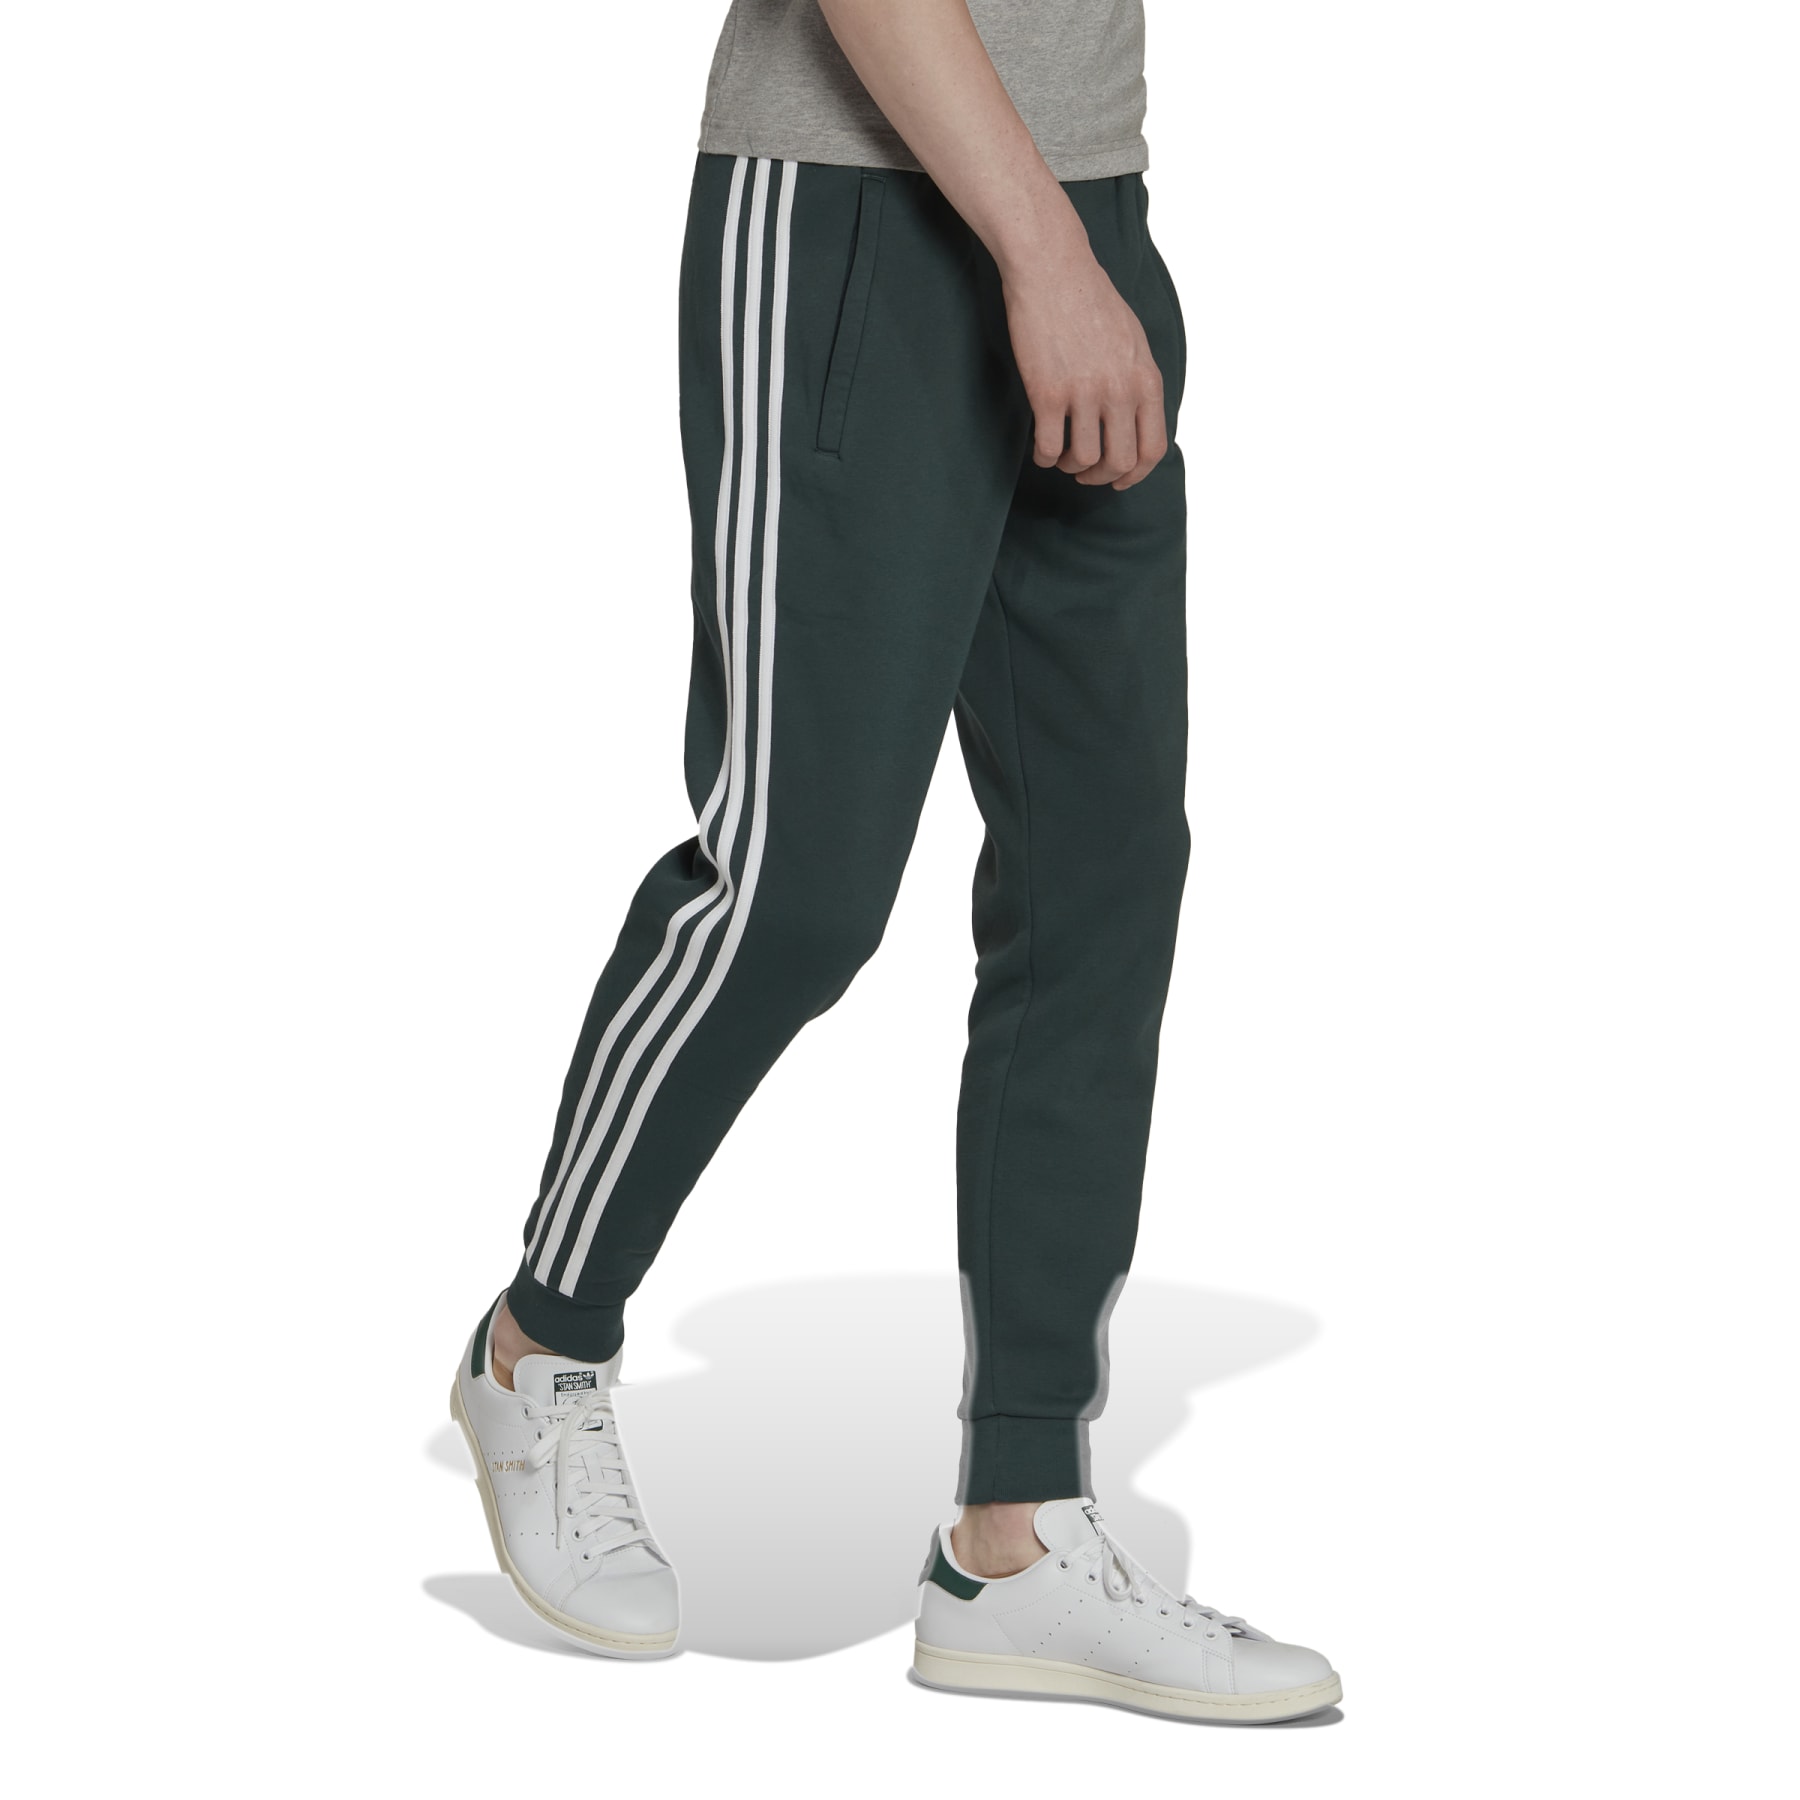 Adidas 3-Stripes Pants Mineral Green